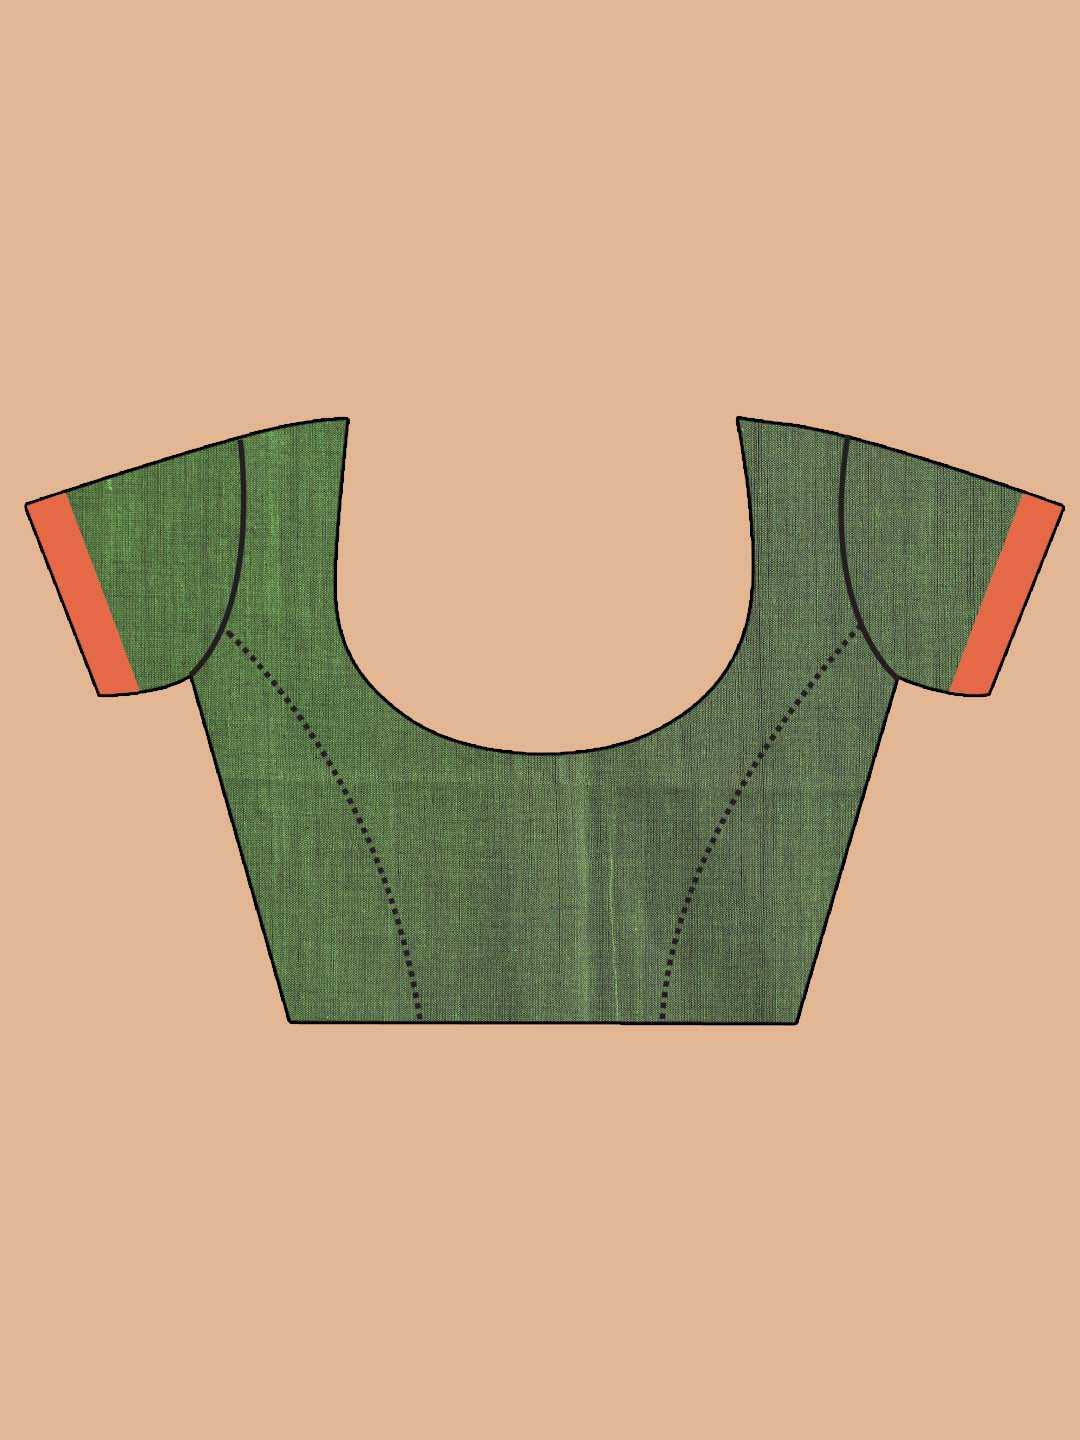 Indethnic Green Bengal Handloom Pure Cotton Saree Work Saree - Blouse Piece View